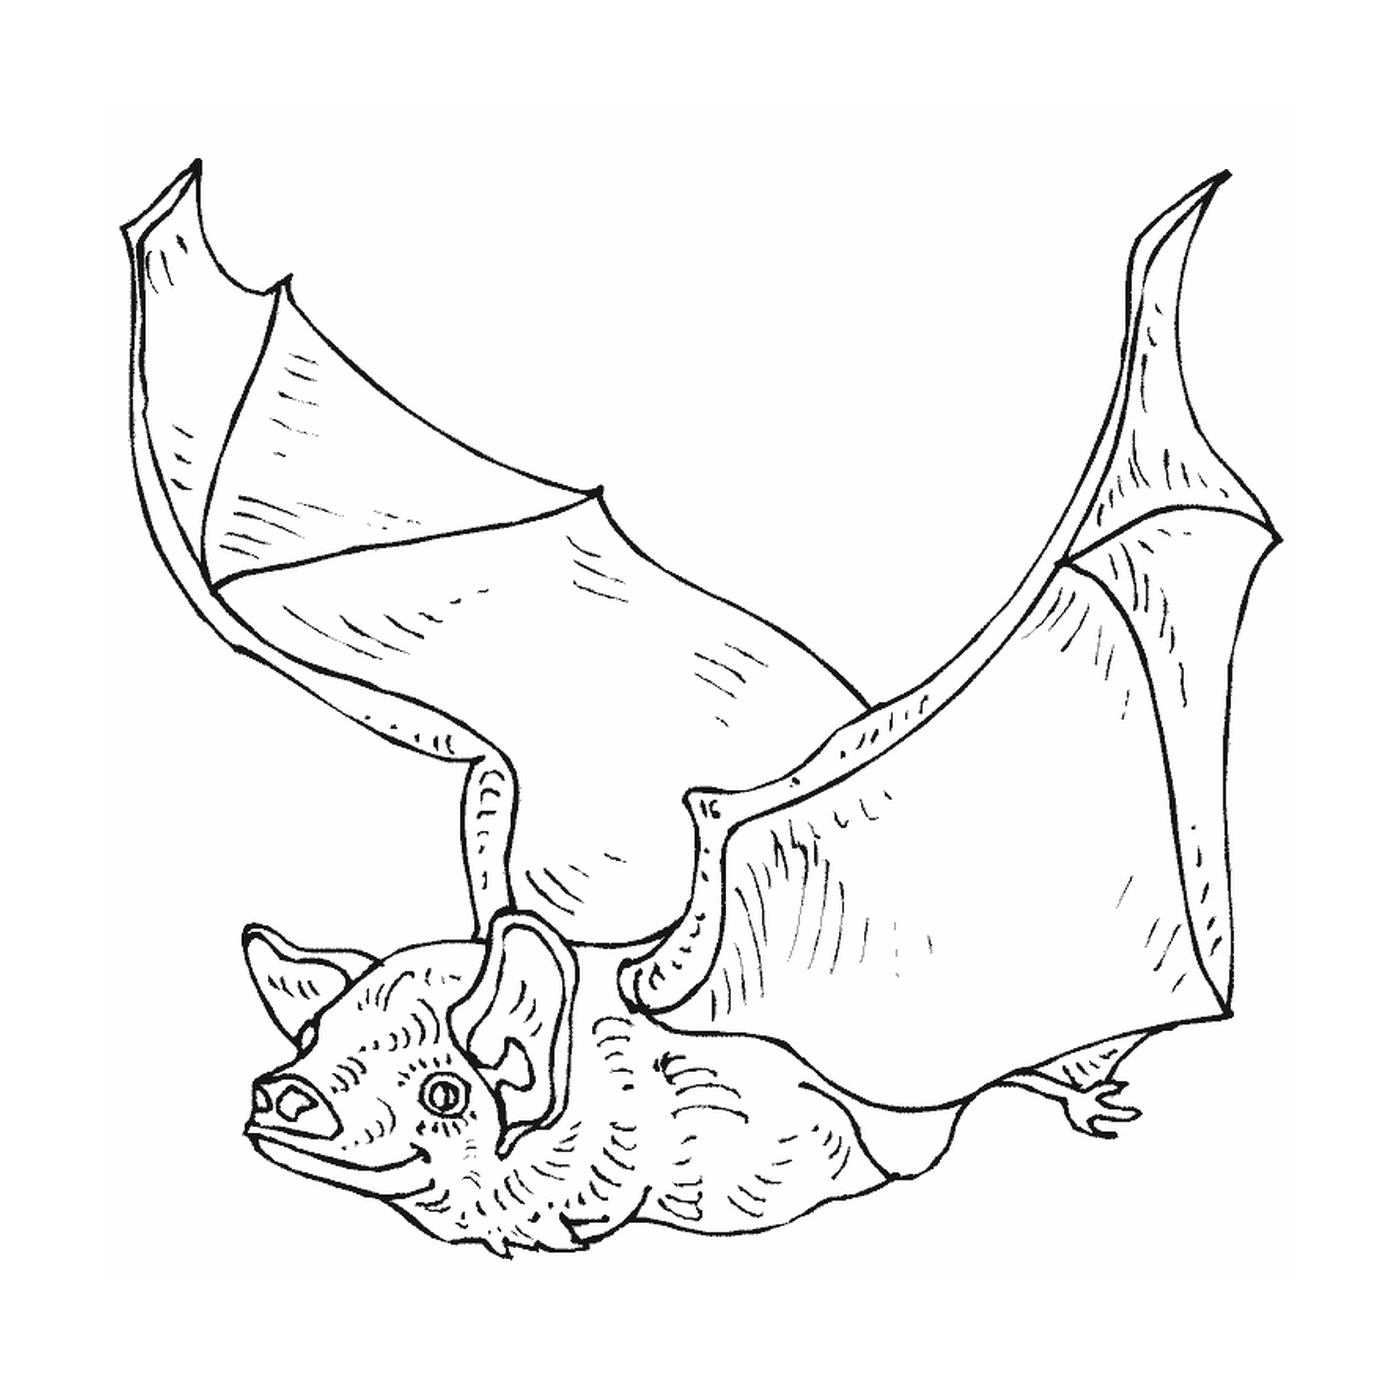  bat in flight with deployed wings 